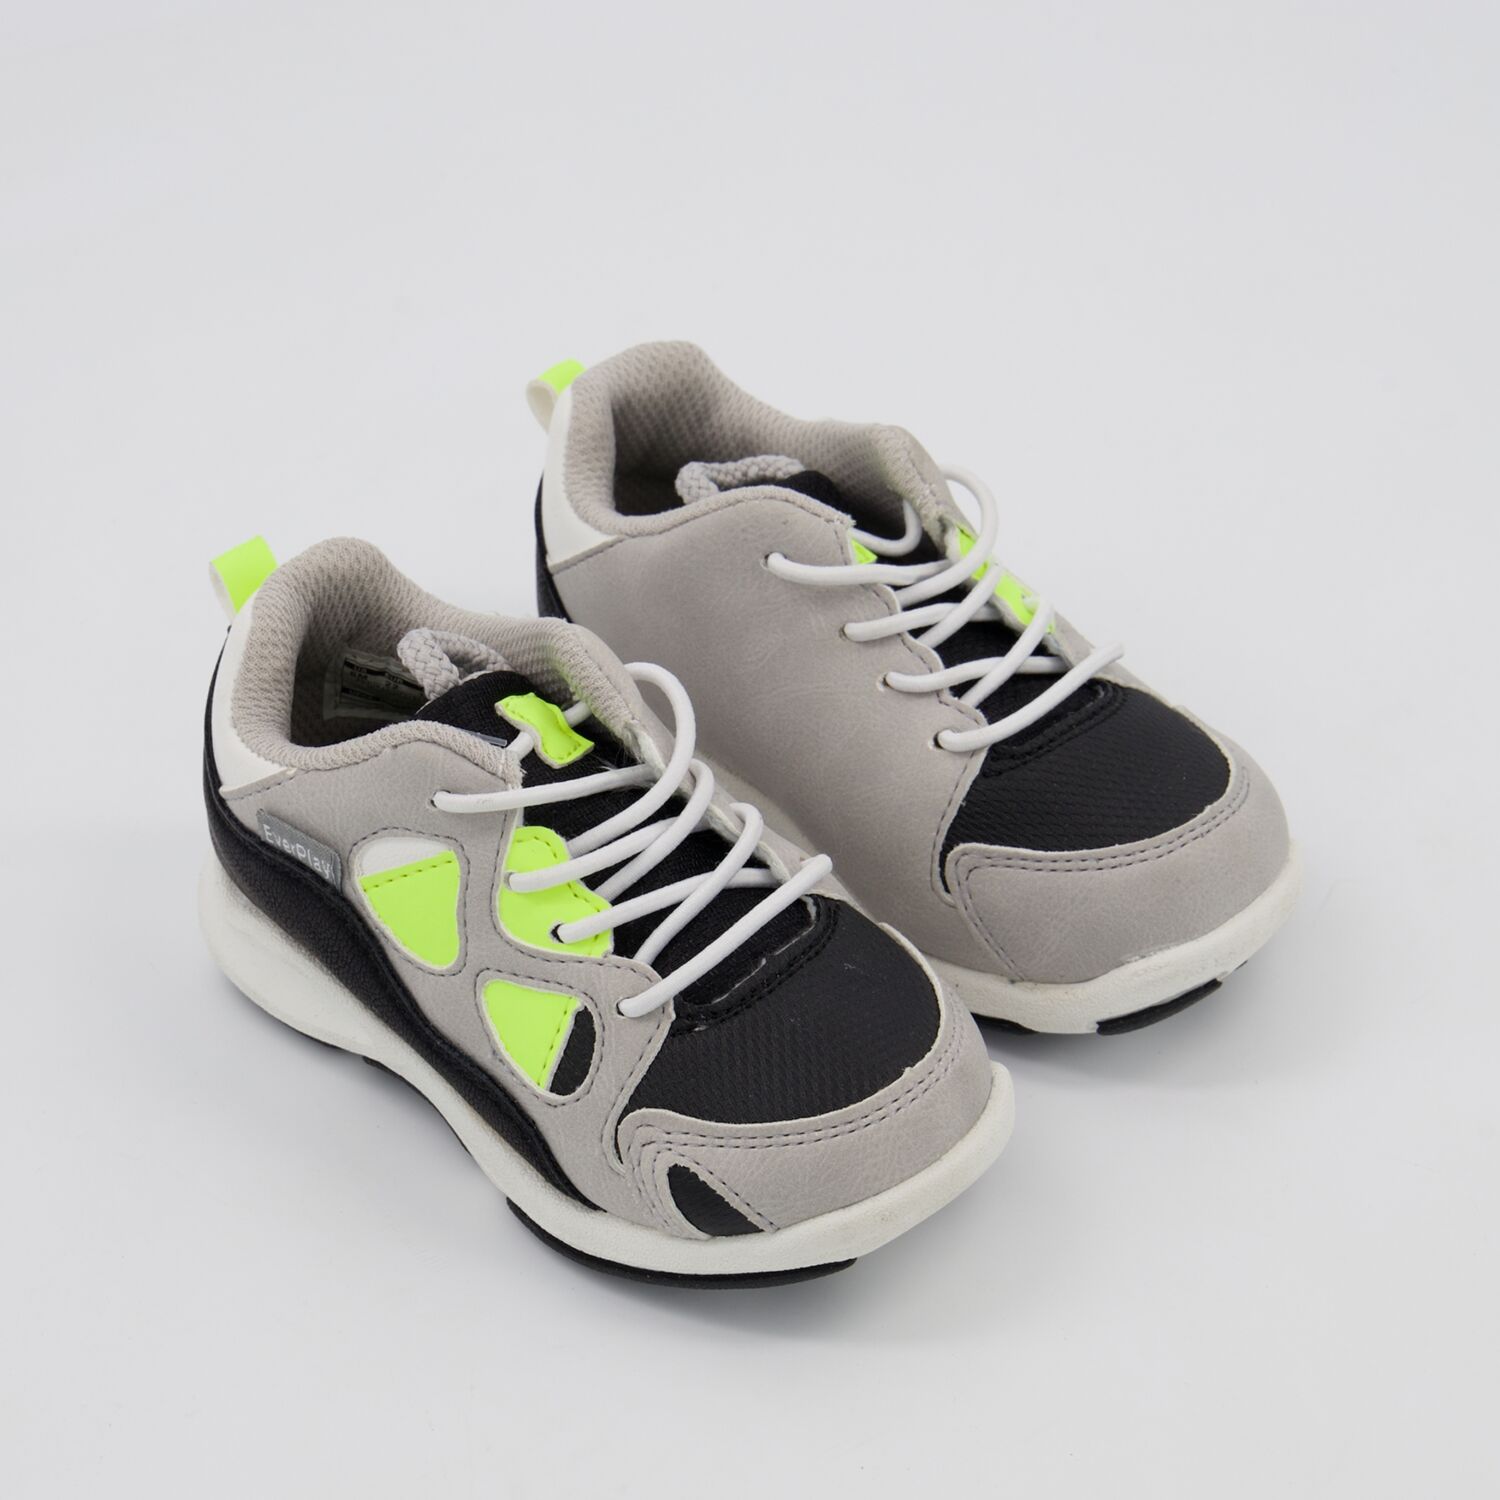 Kids' Shoes - Trainers - Sandals - Designer - TK Maxx UK